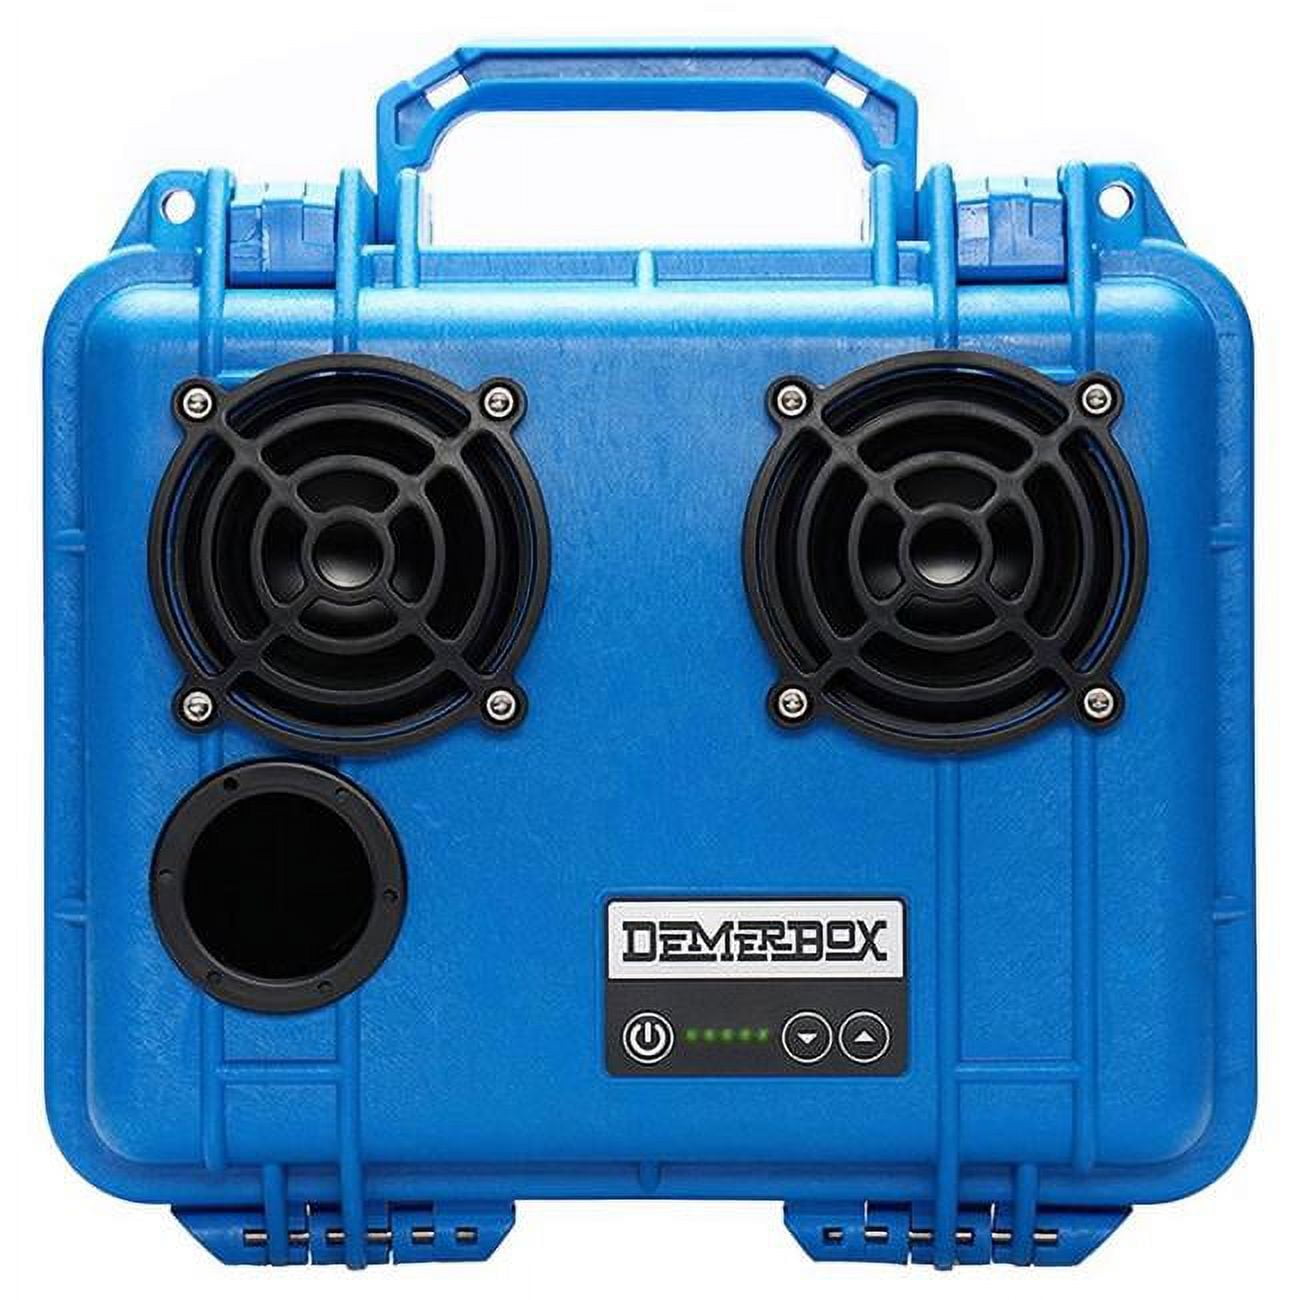 3014021 DB2 Wireless Bluetooth Weather Resistant Portable Speaker, Blue -  Demerbox